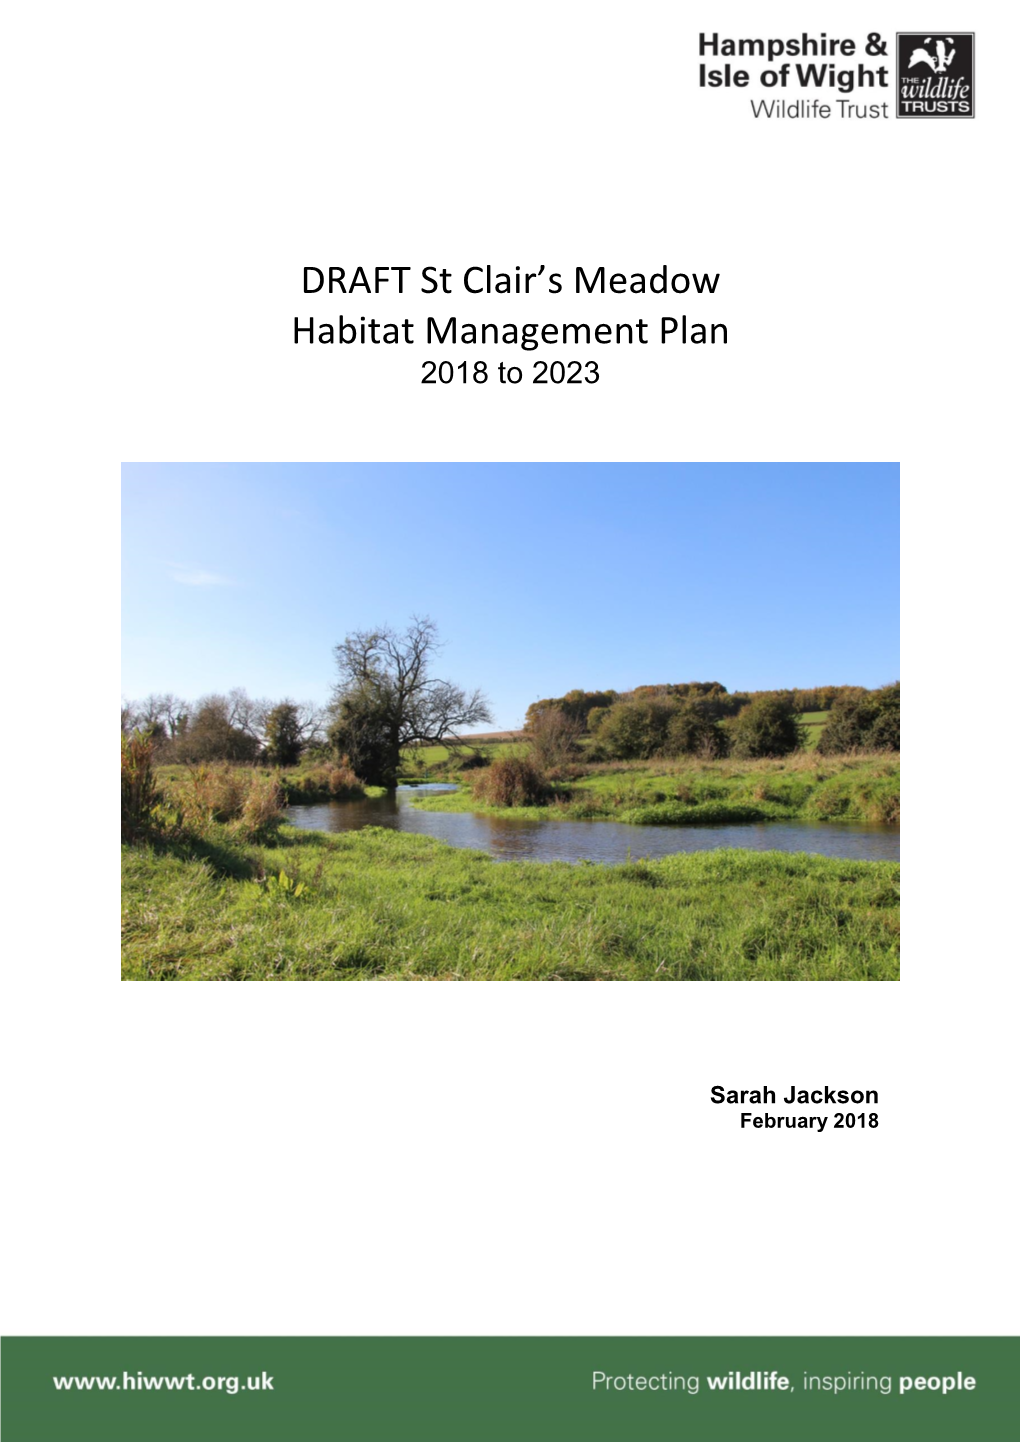 DRAFT St Clair's Meadow Habitat Management Plan